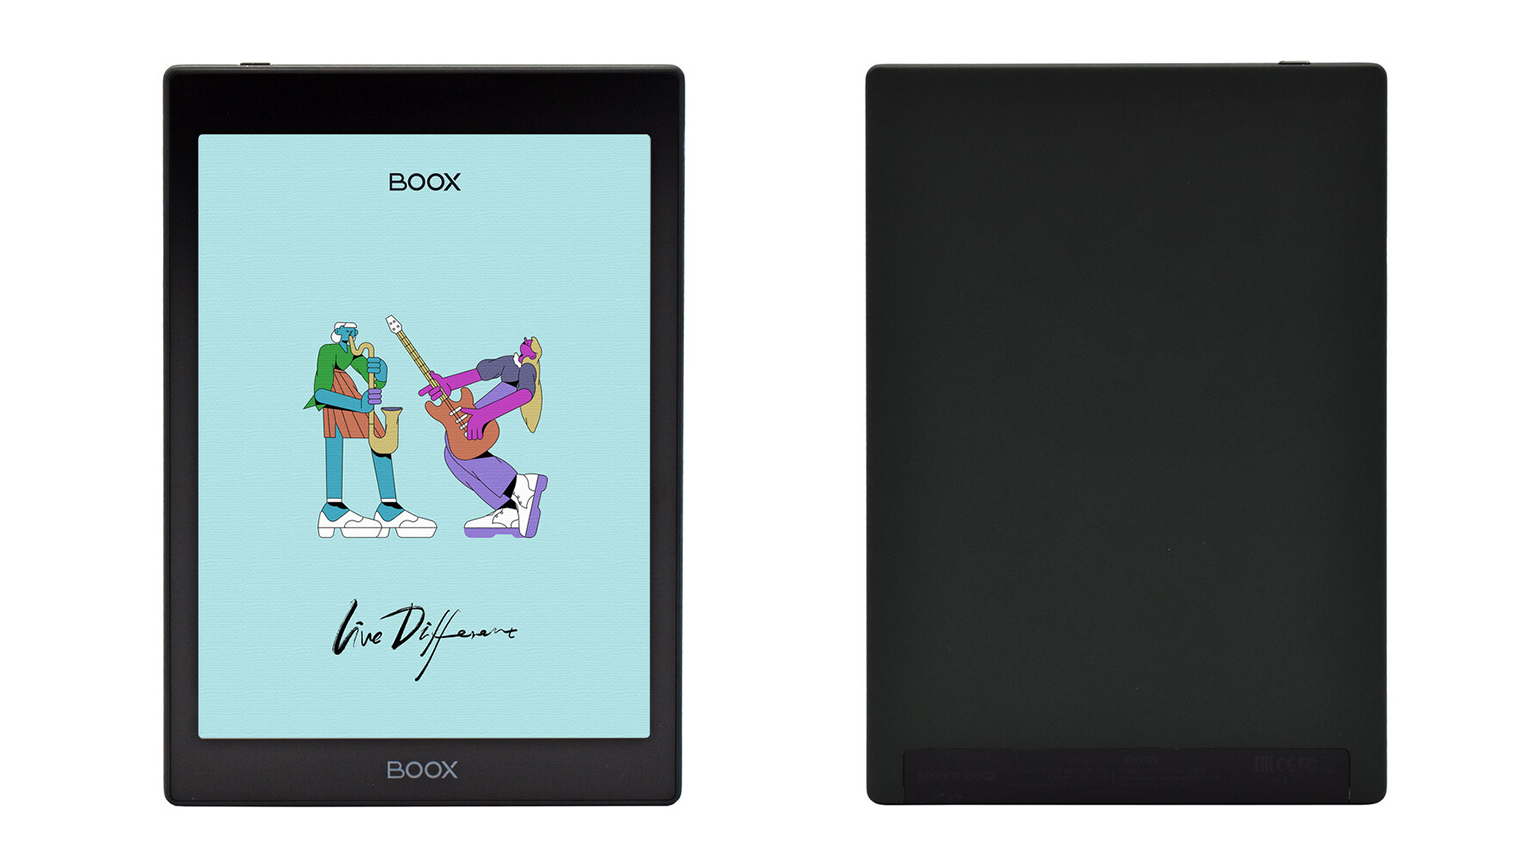 Ebook ONYX BOOX Boox Negro no 32 Gb 7